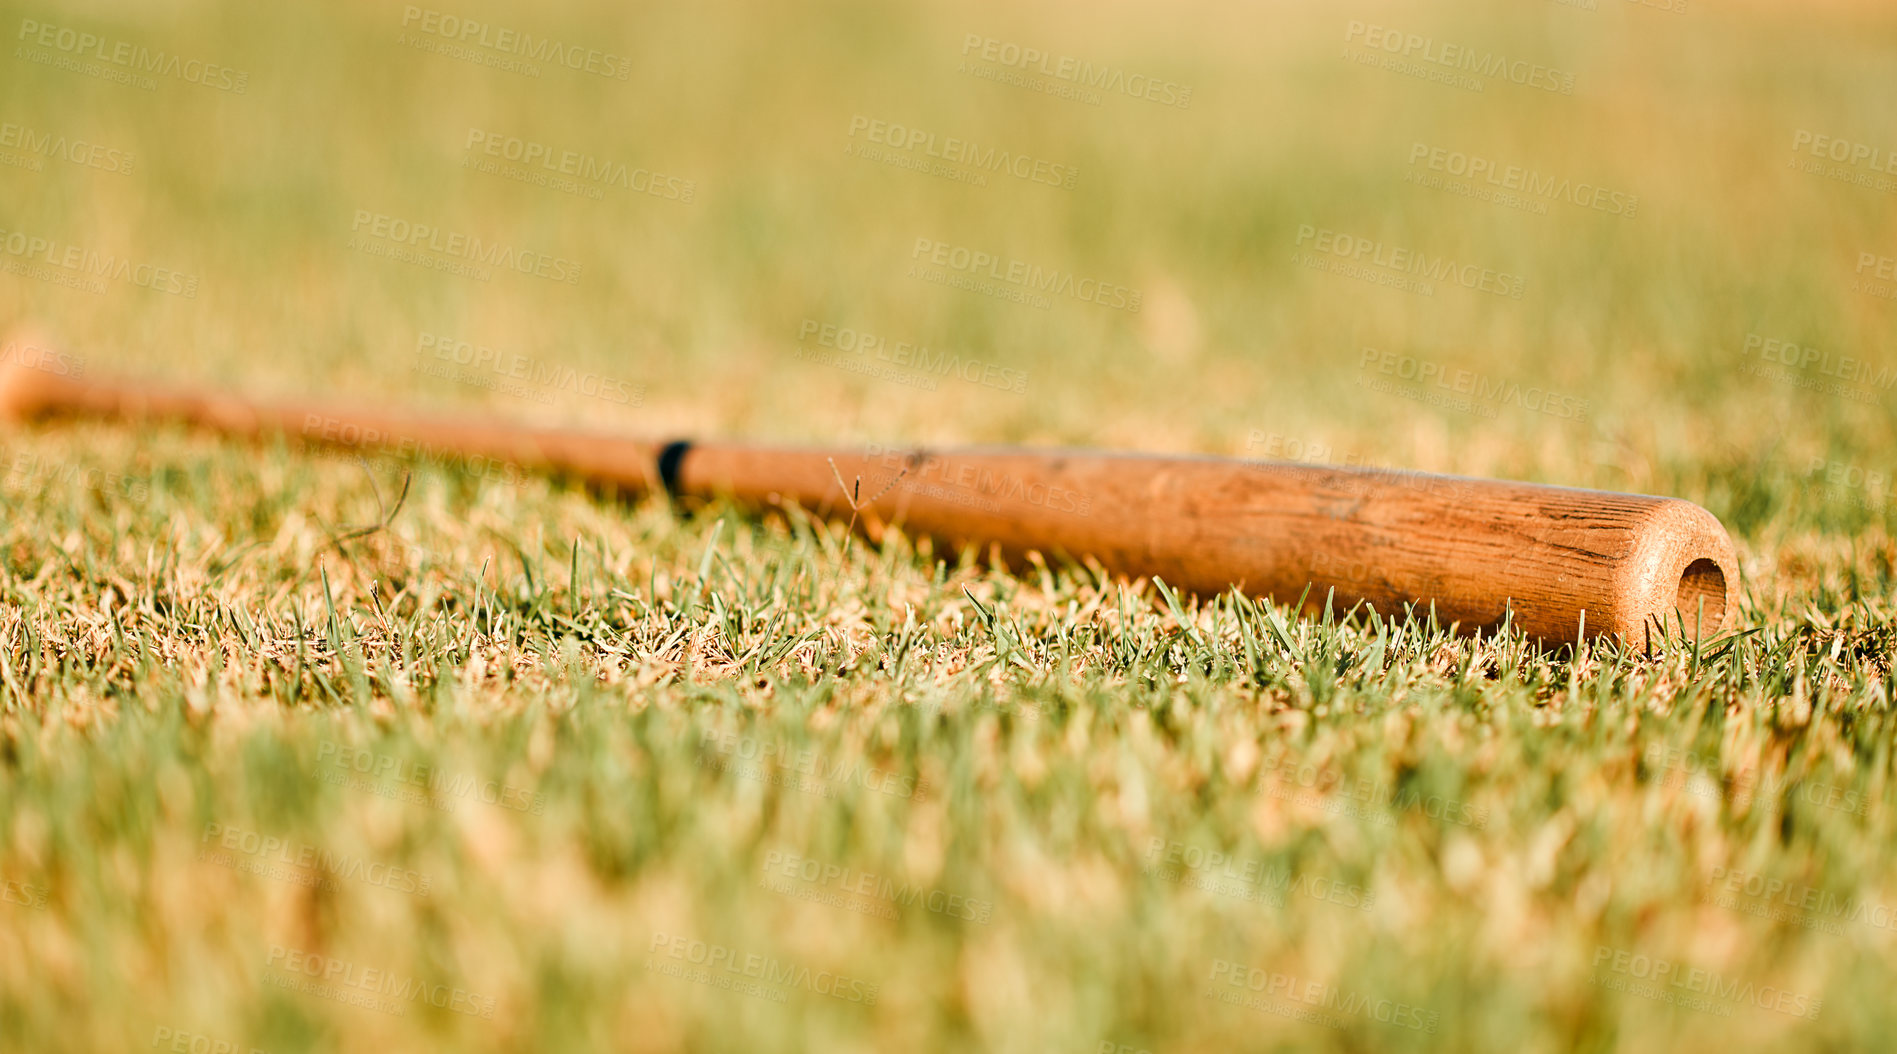 Buy stock photo Shot of a baseball bat lying on a field